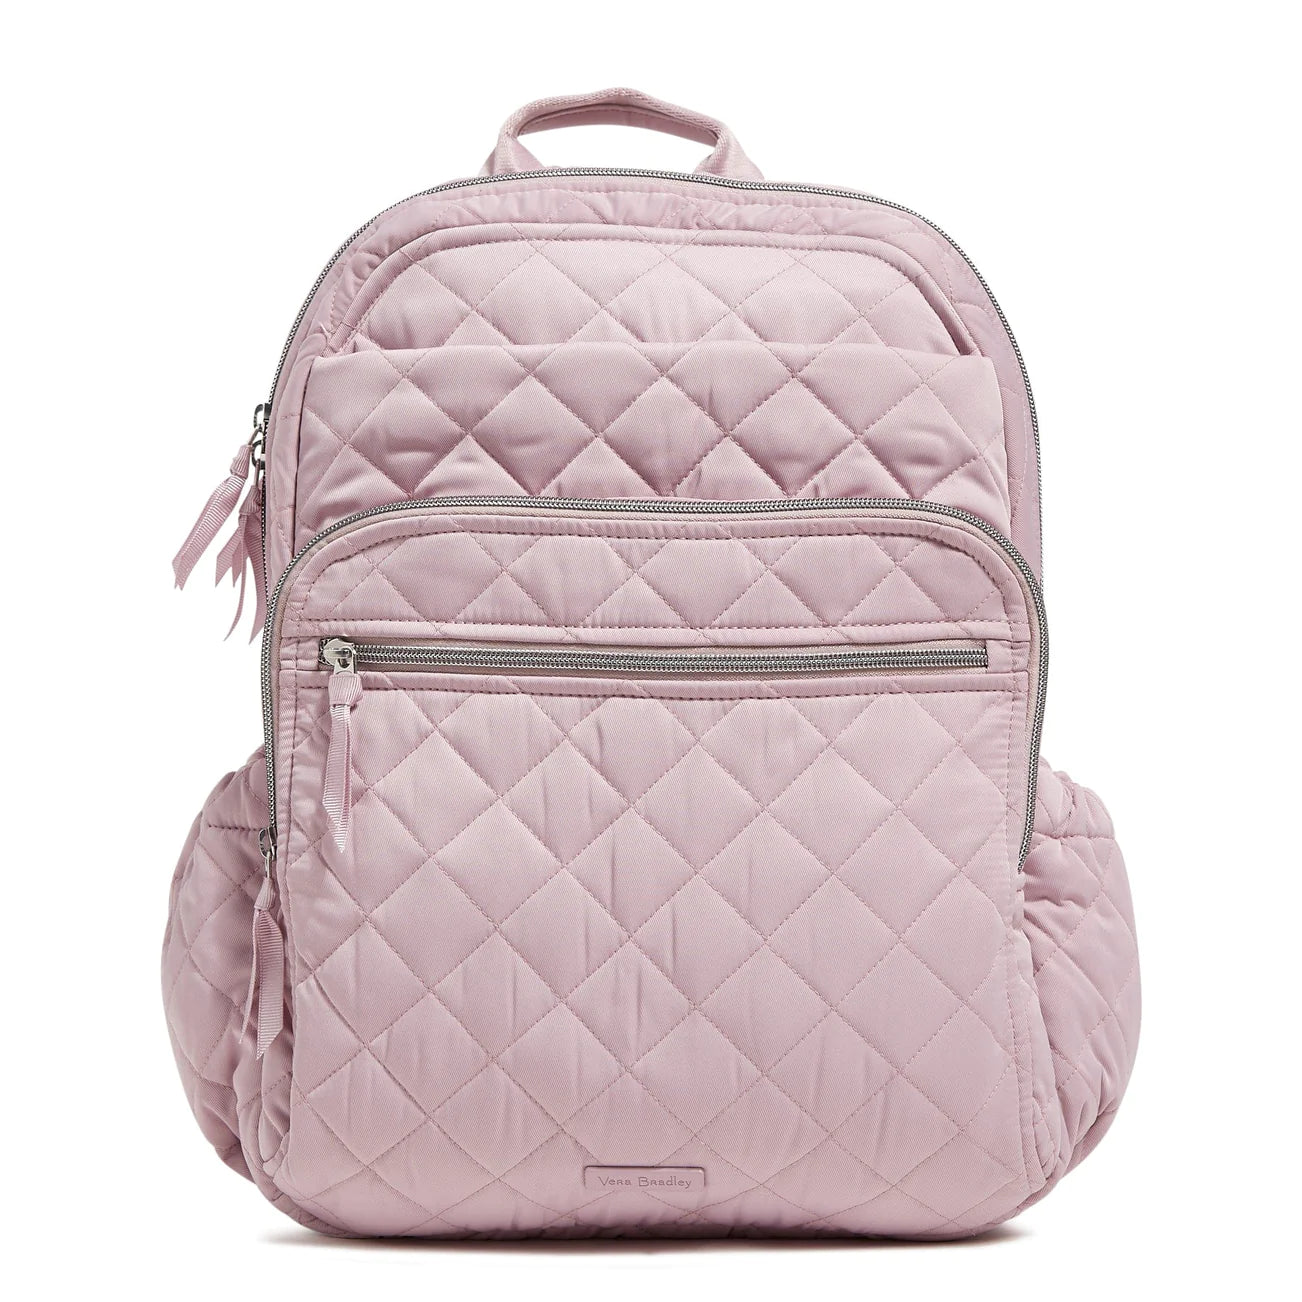 Vera Bradley XL Campus Backpack : Hydrangea Pink - Image 1